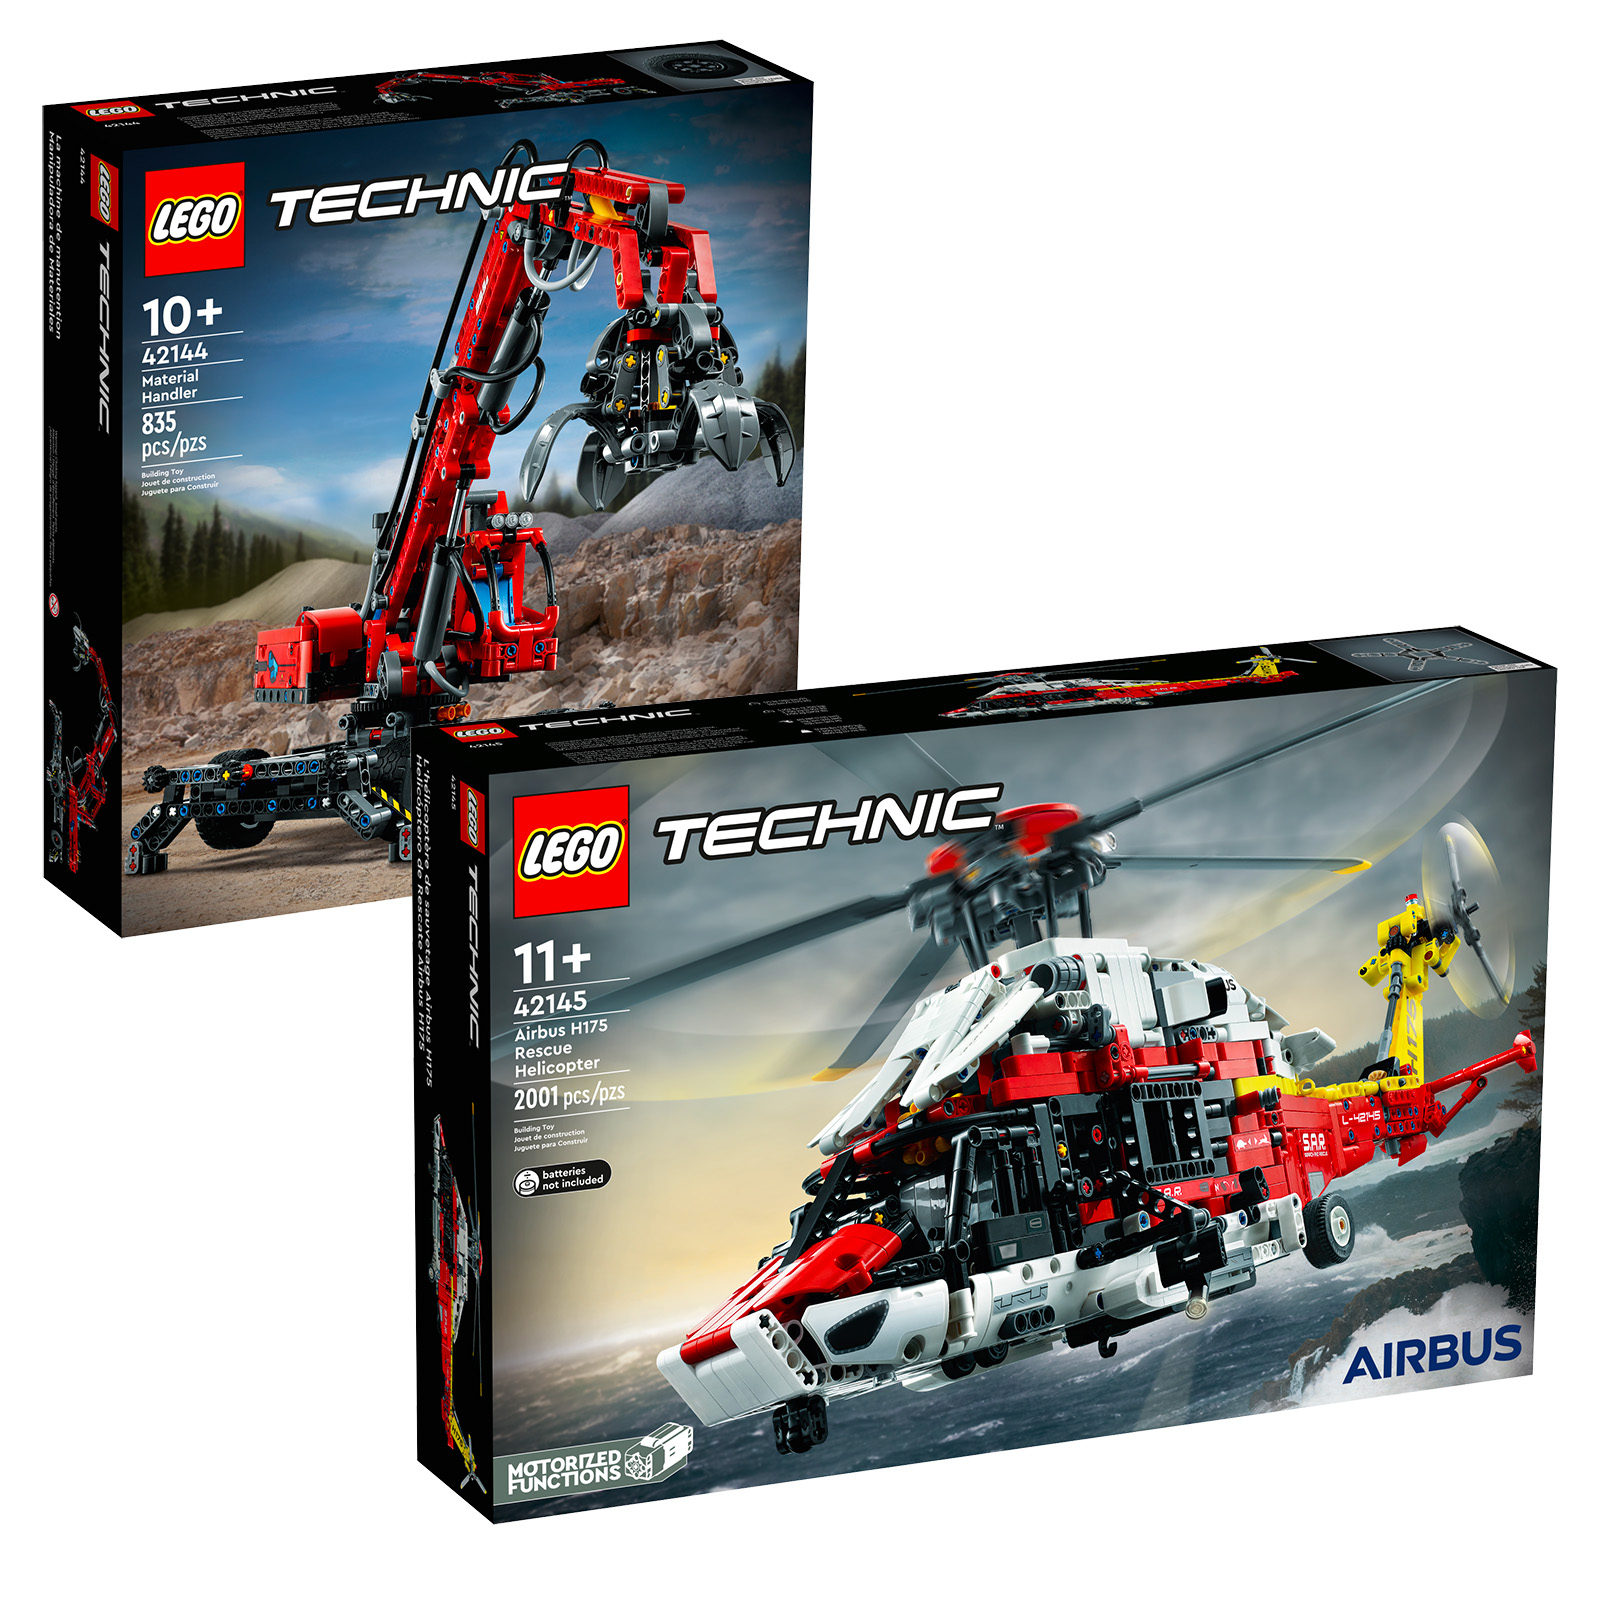 LEGO Shopissa: LEGO Technic 42144 Material Handler ja 42145 Airbus H175 Rescue Helicopter setit ovat verkossa